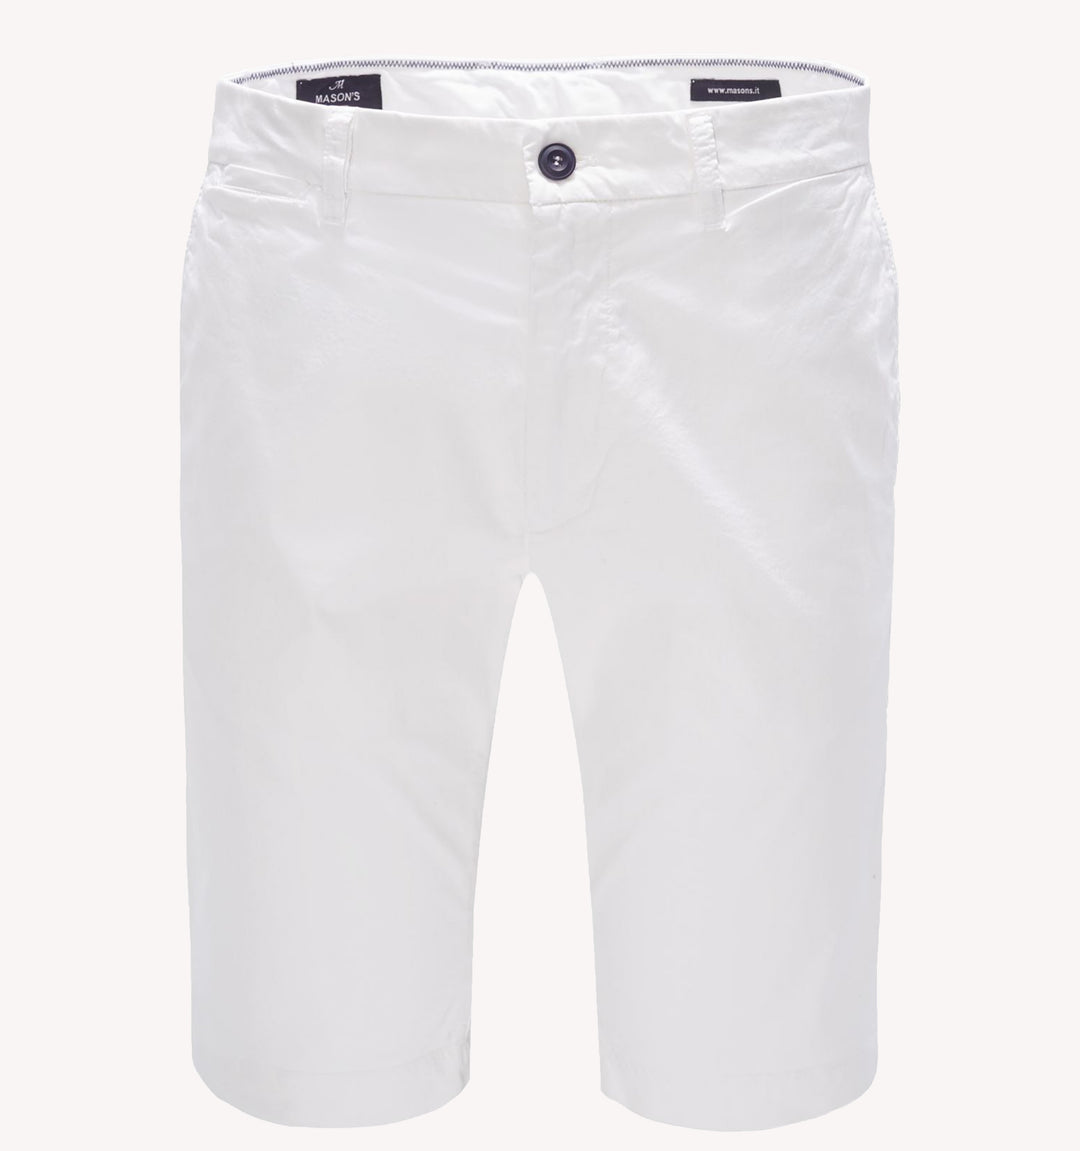 Mason's London Chino Bermuda Shorts in White